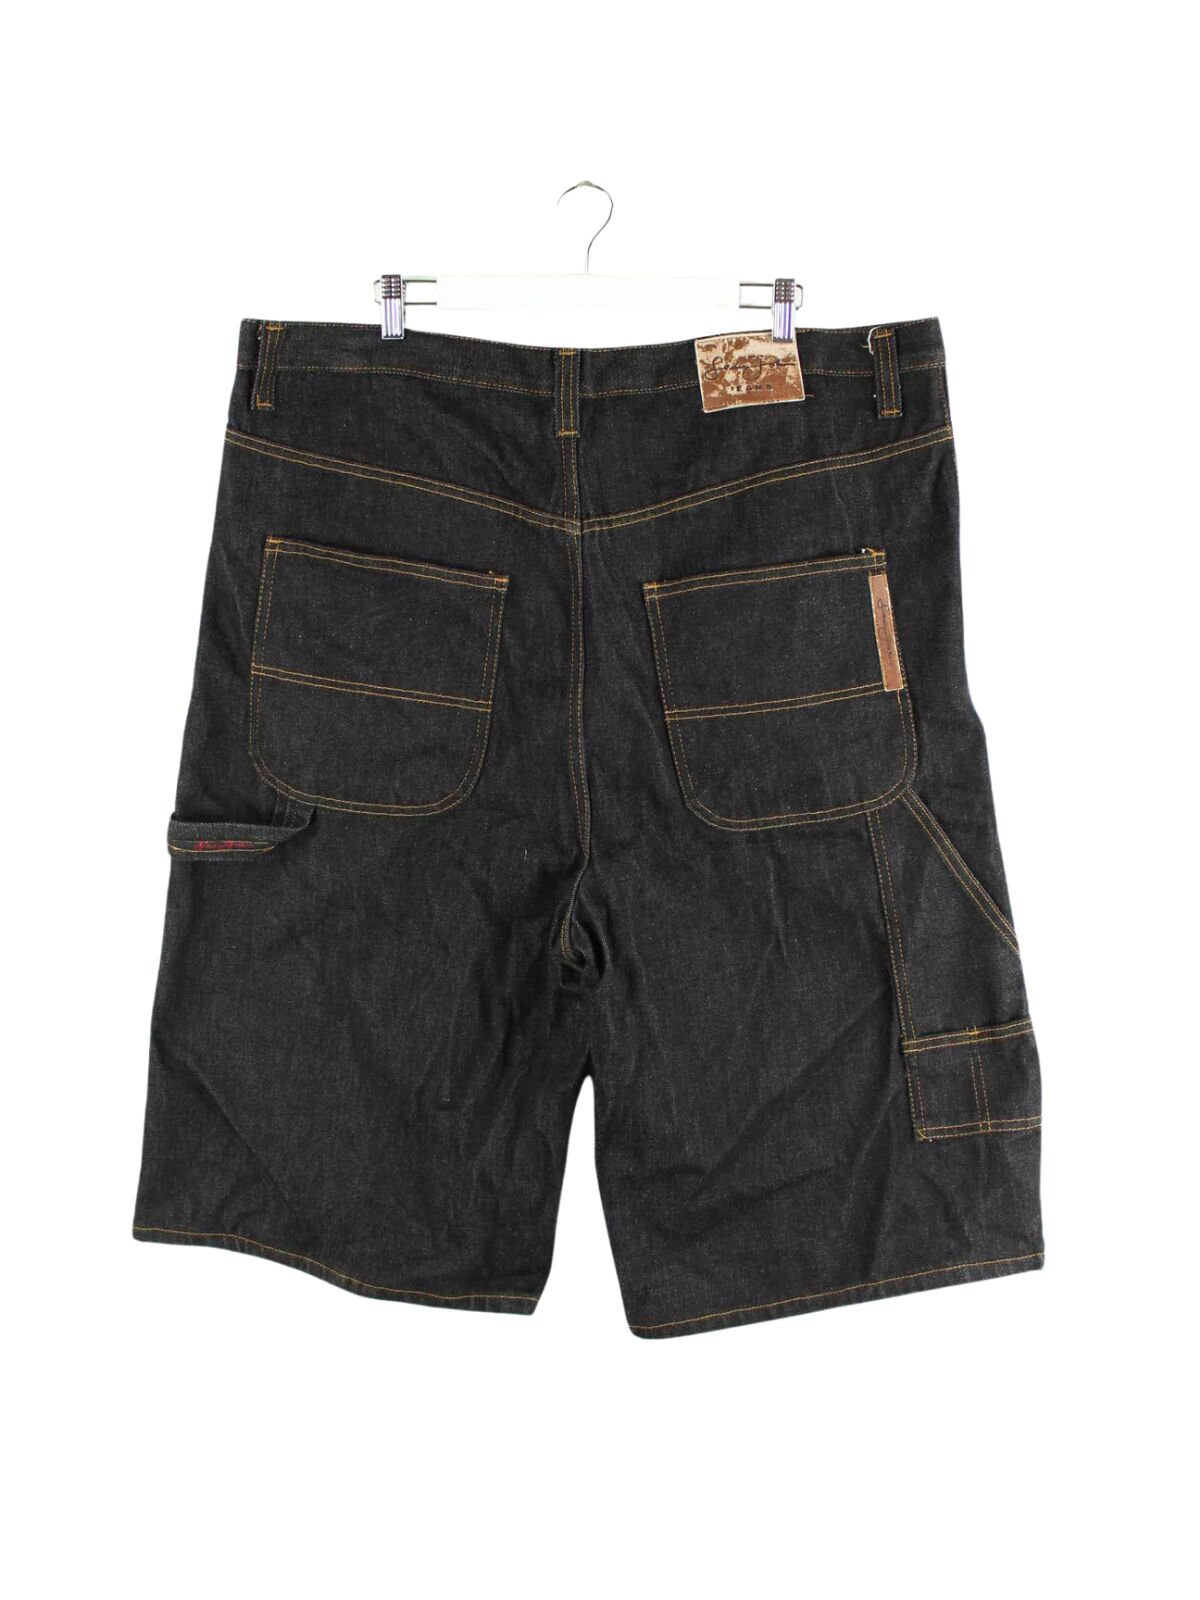 Sean John 90s Vintage Carpenter Jorts / Jeans Shorts Grau W42 (front image)